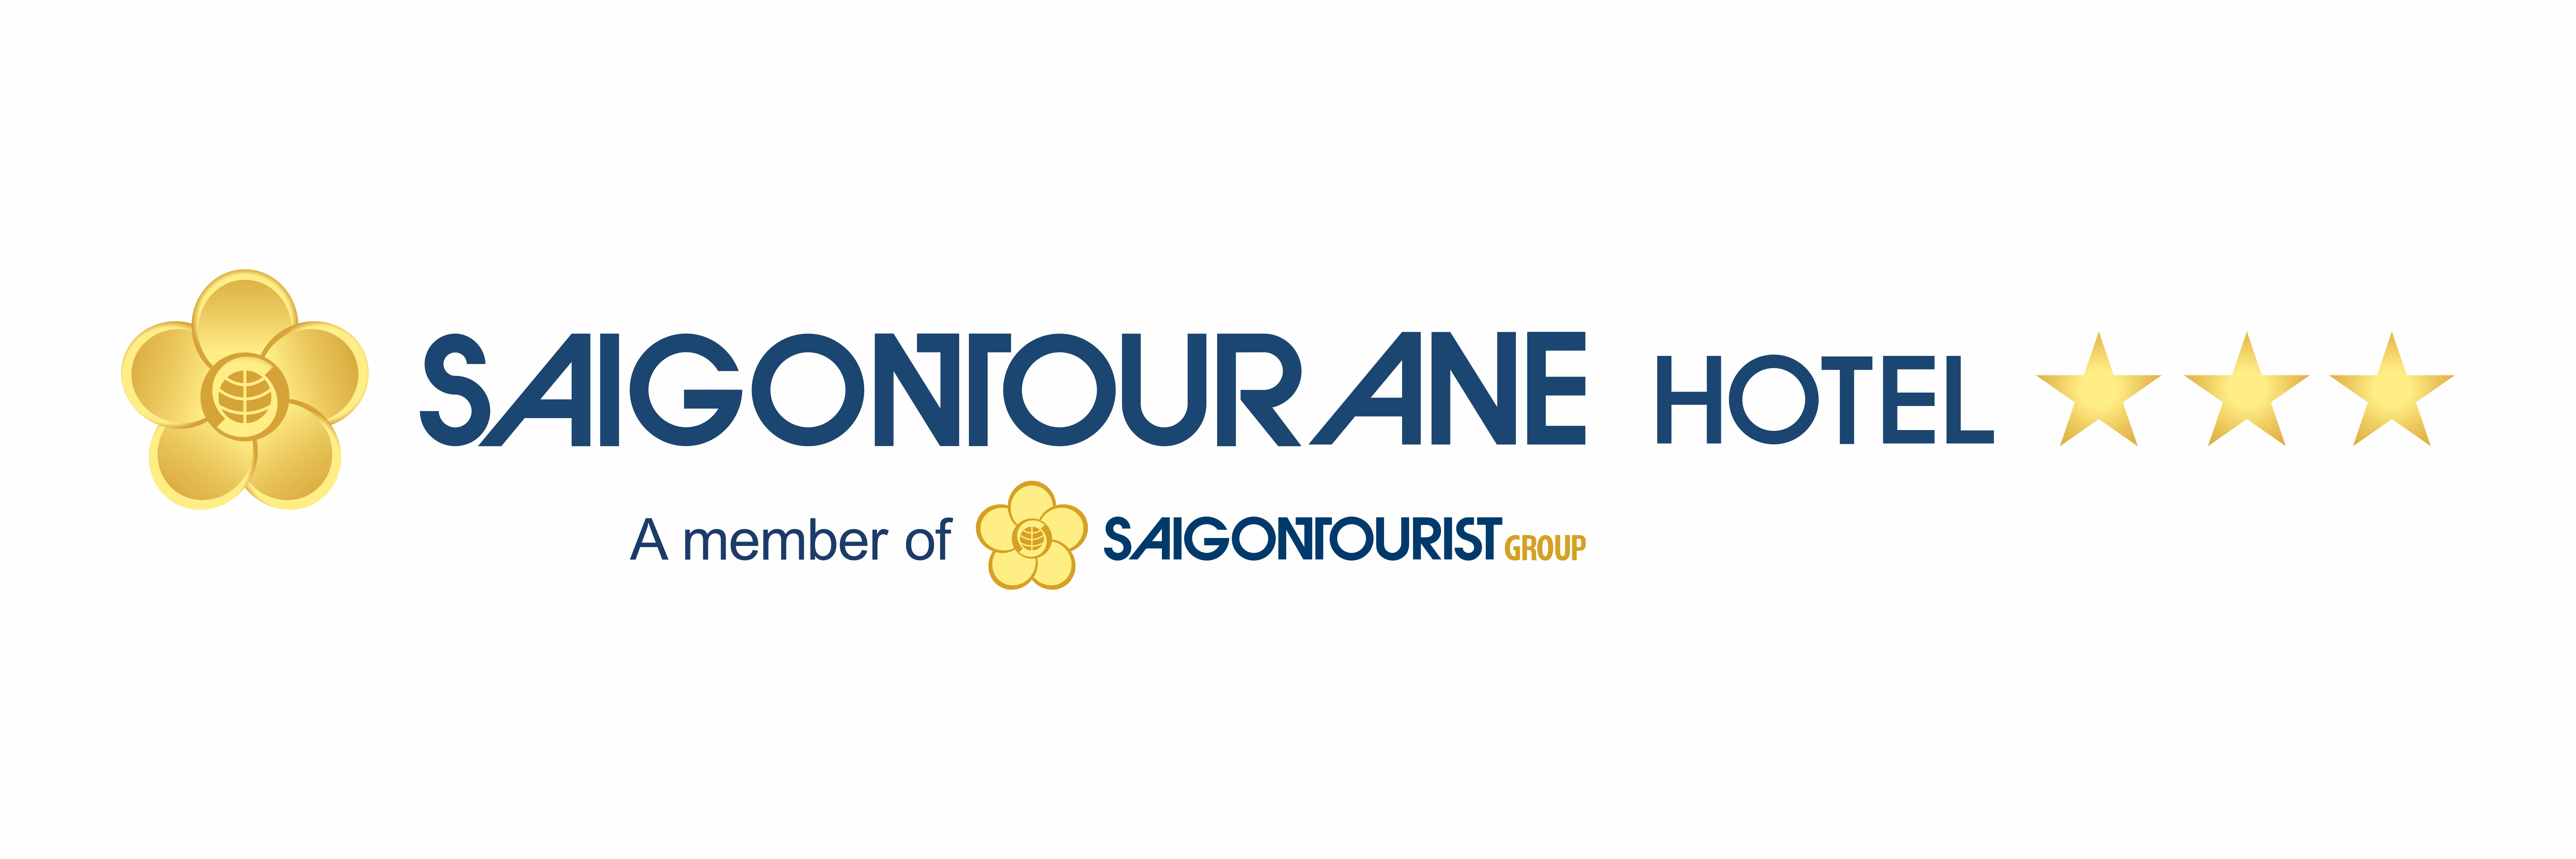 Saigontouranne Hotel